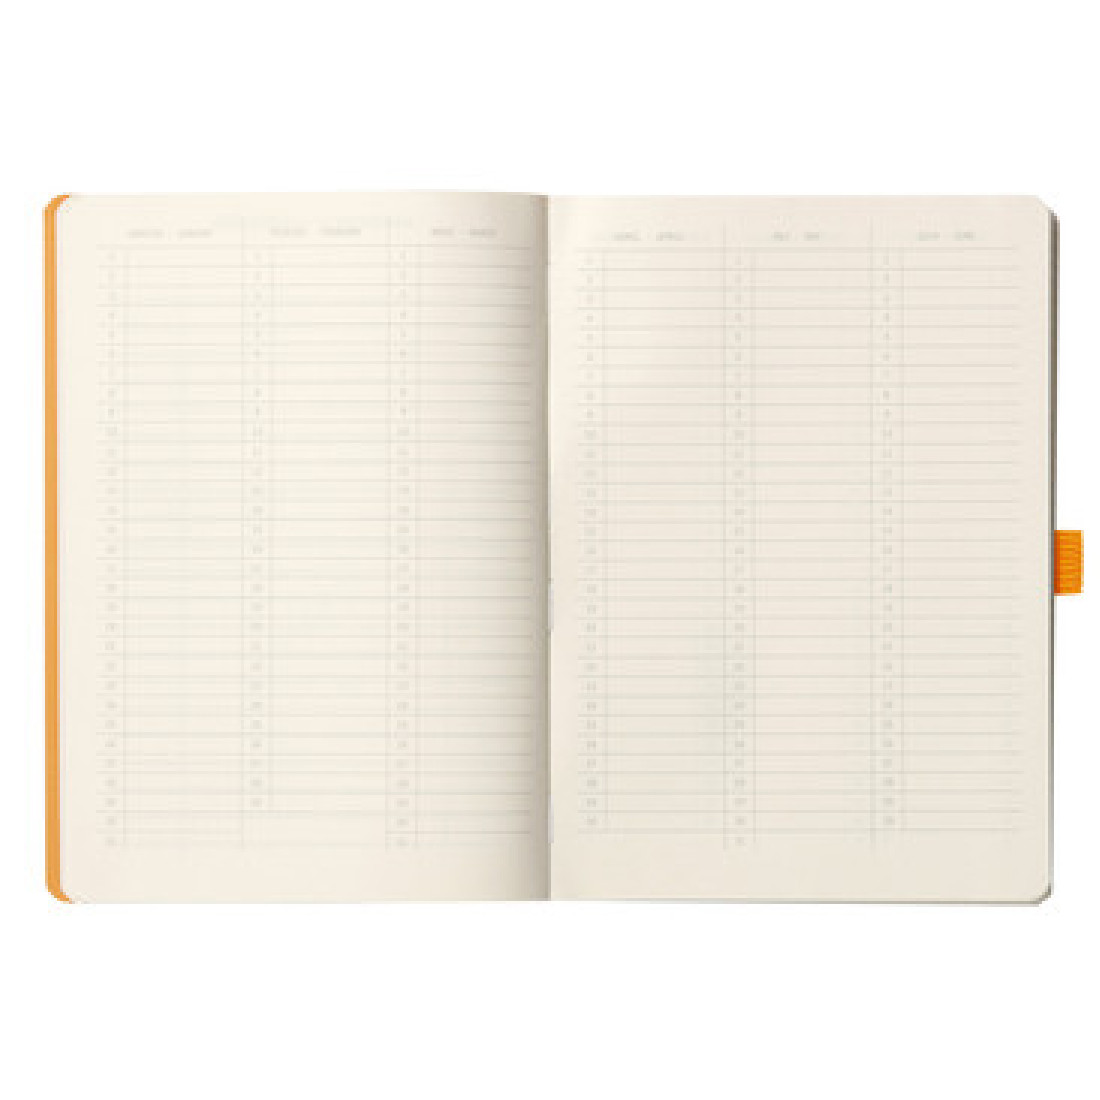 Rhodia GoalBook A5 (14,8x21 cm) orange dot grid soft cover